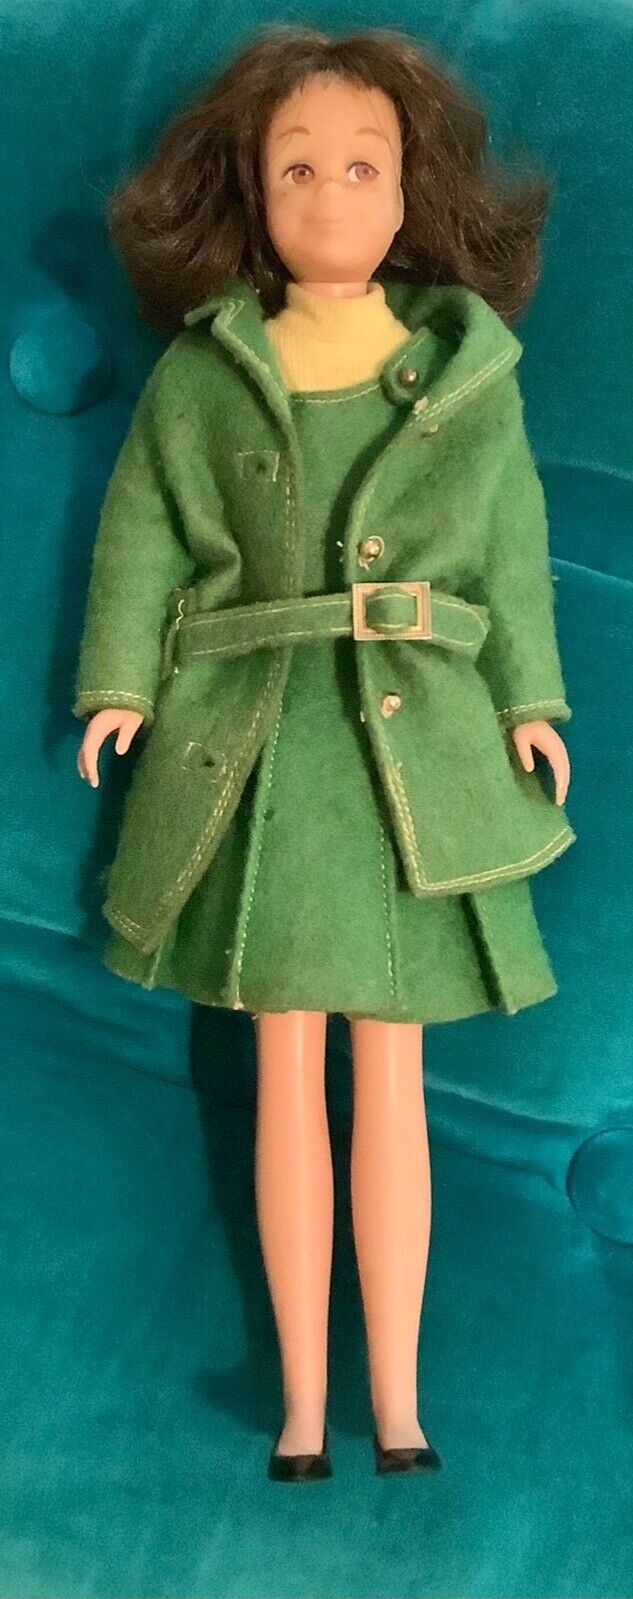 Barbie Doll Skipper Clothes Sewing Pattern McCalls 8357 - Vintage